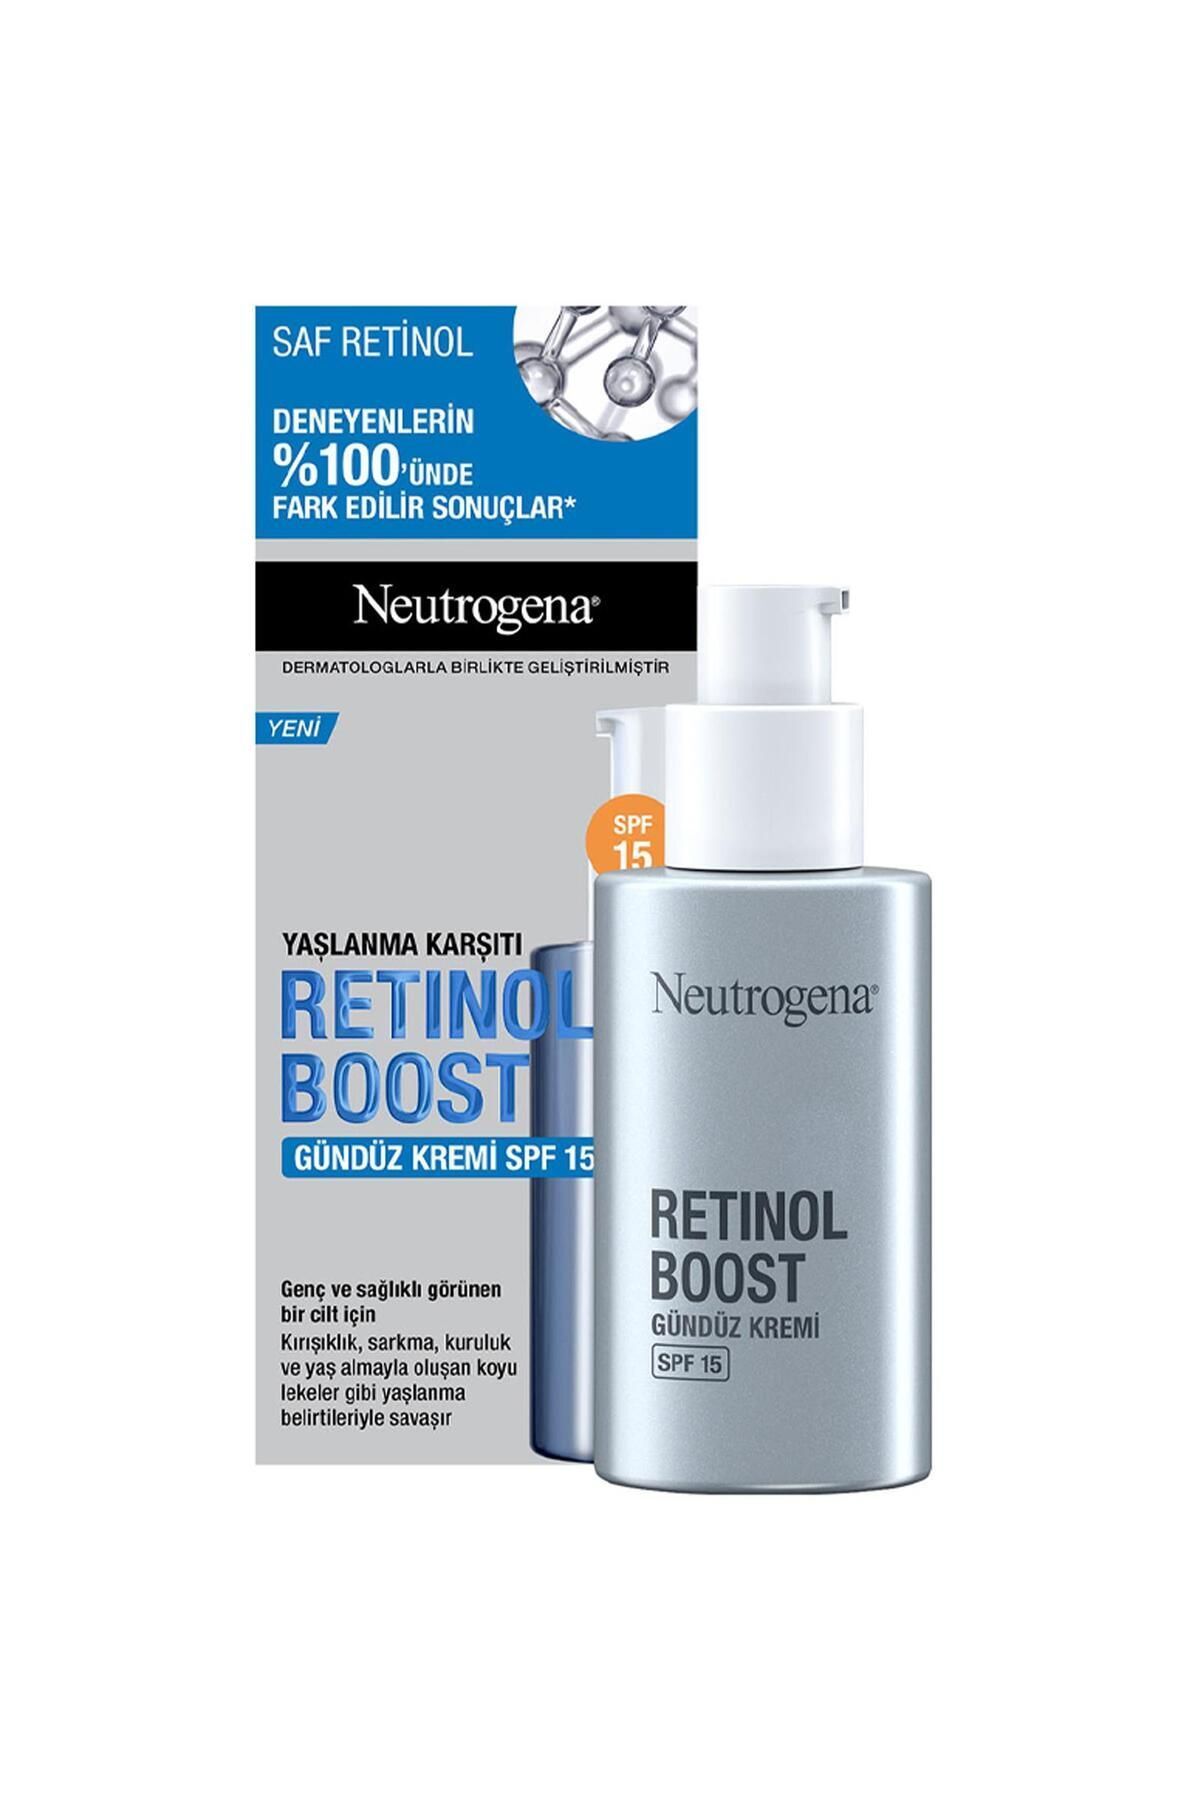 Neutrogena Retinol Boost Yaşlan Ma Karşıtı Gündüz Kremi Spf 15 50 ml